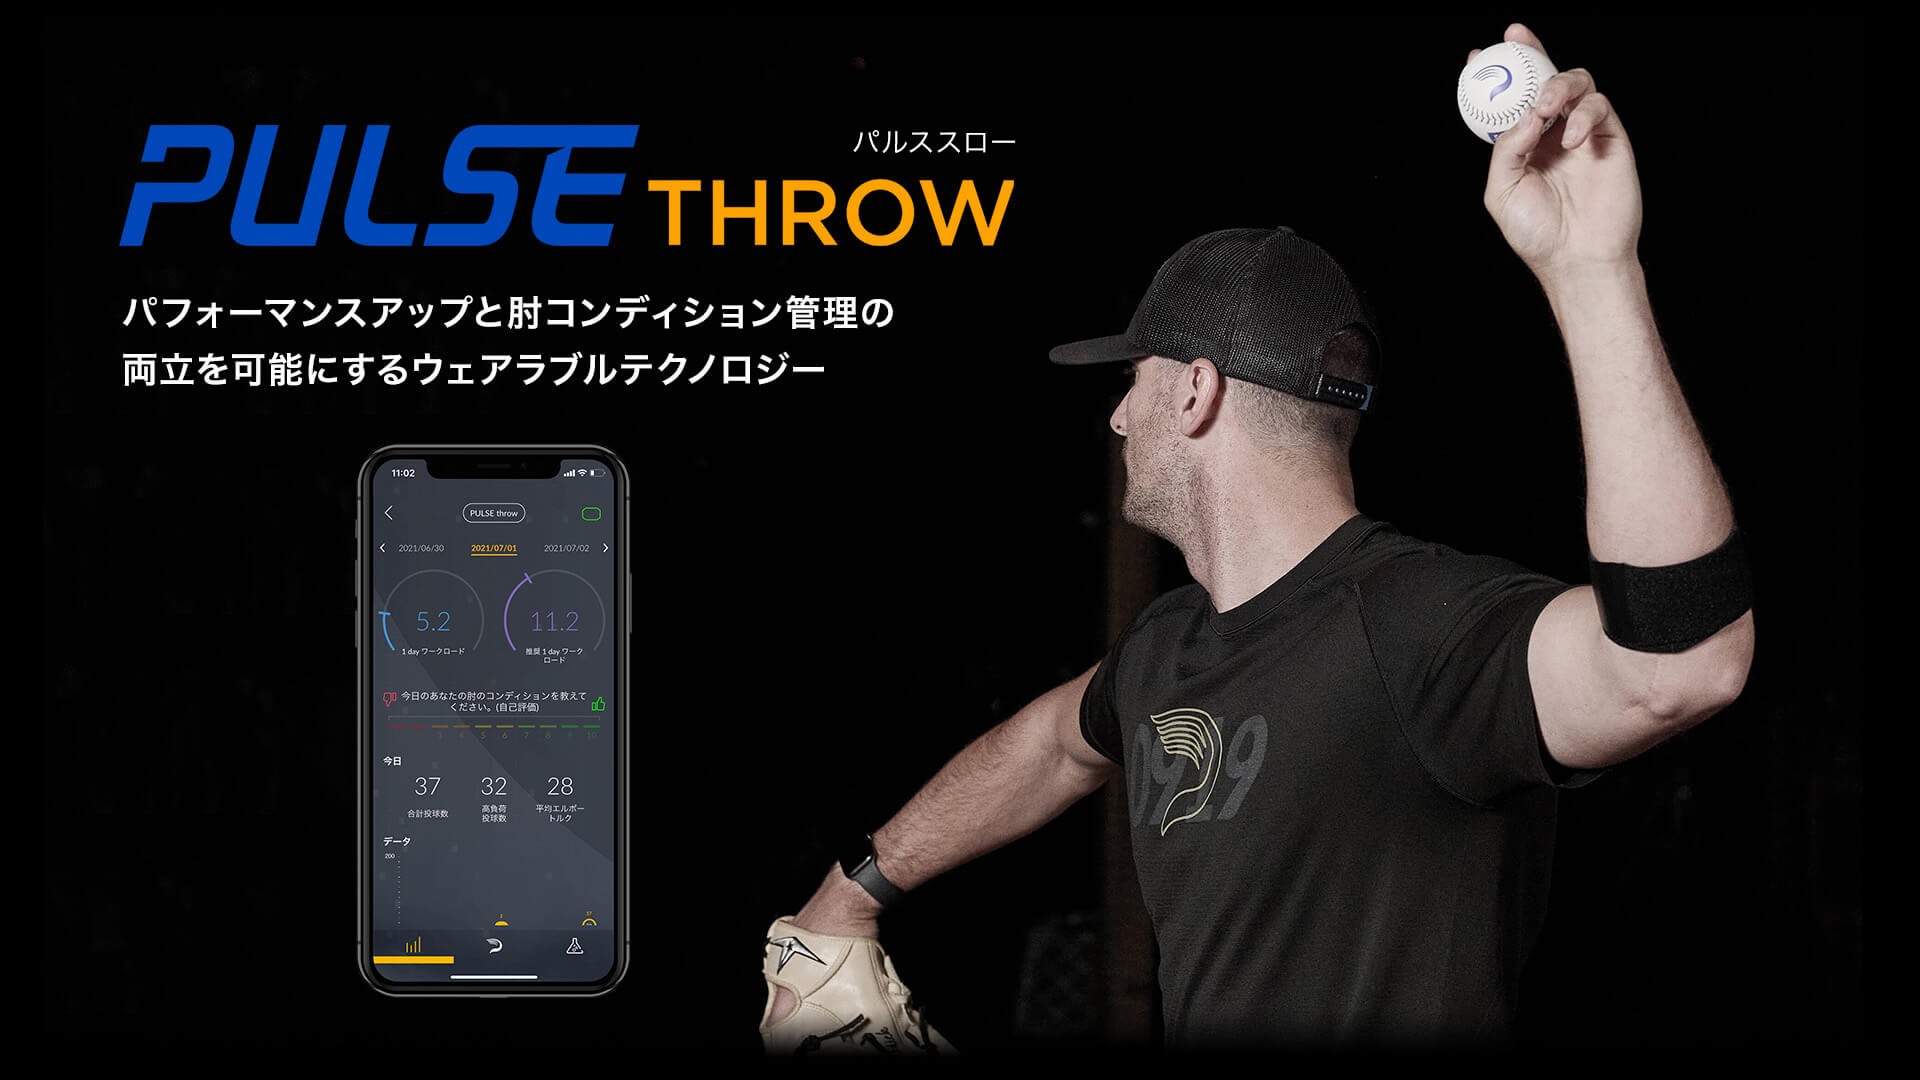 Pulse throw(パルススロー) : 野球肘の悩みを解決NPB全12球団中6球団